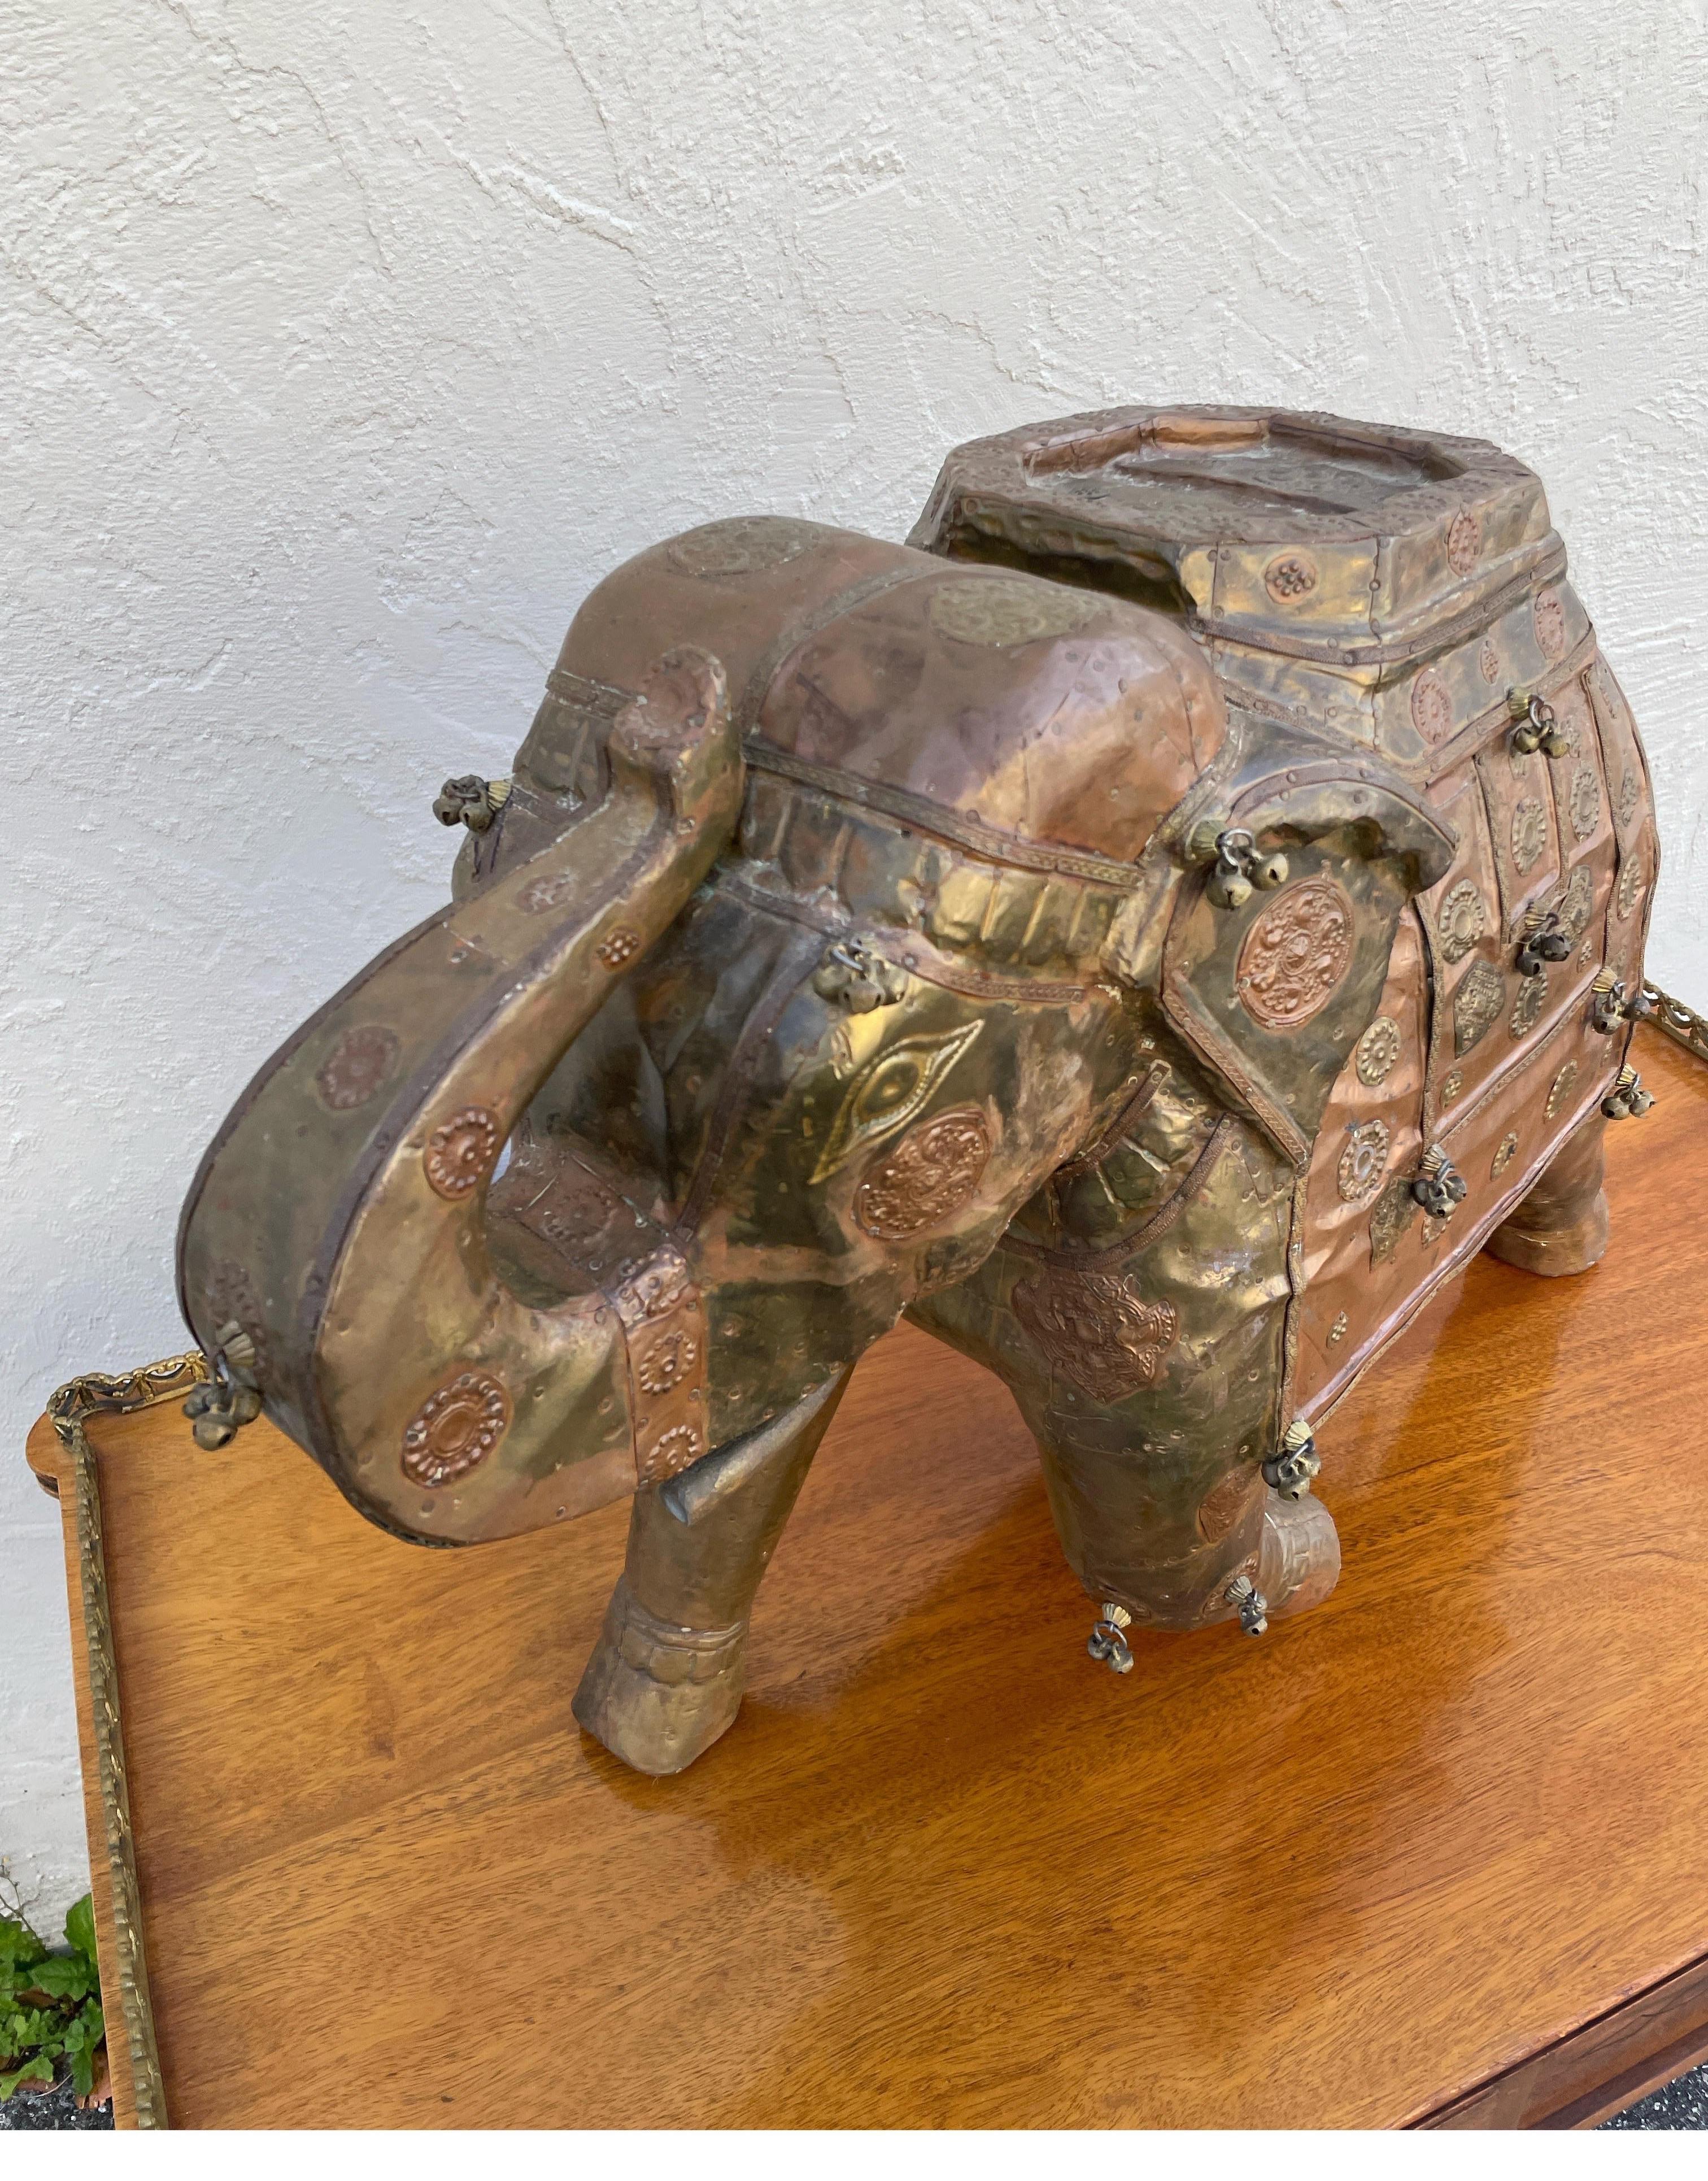 Vintage Brass and copper ornamental Elephant sculpture.